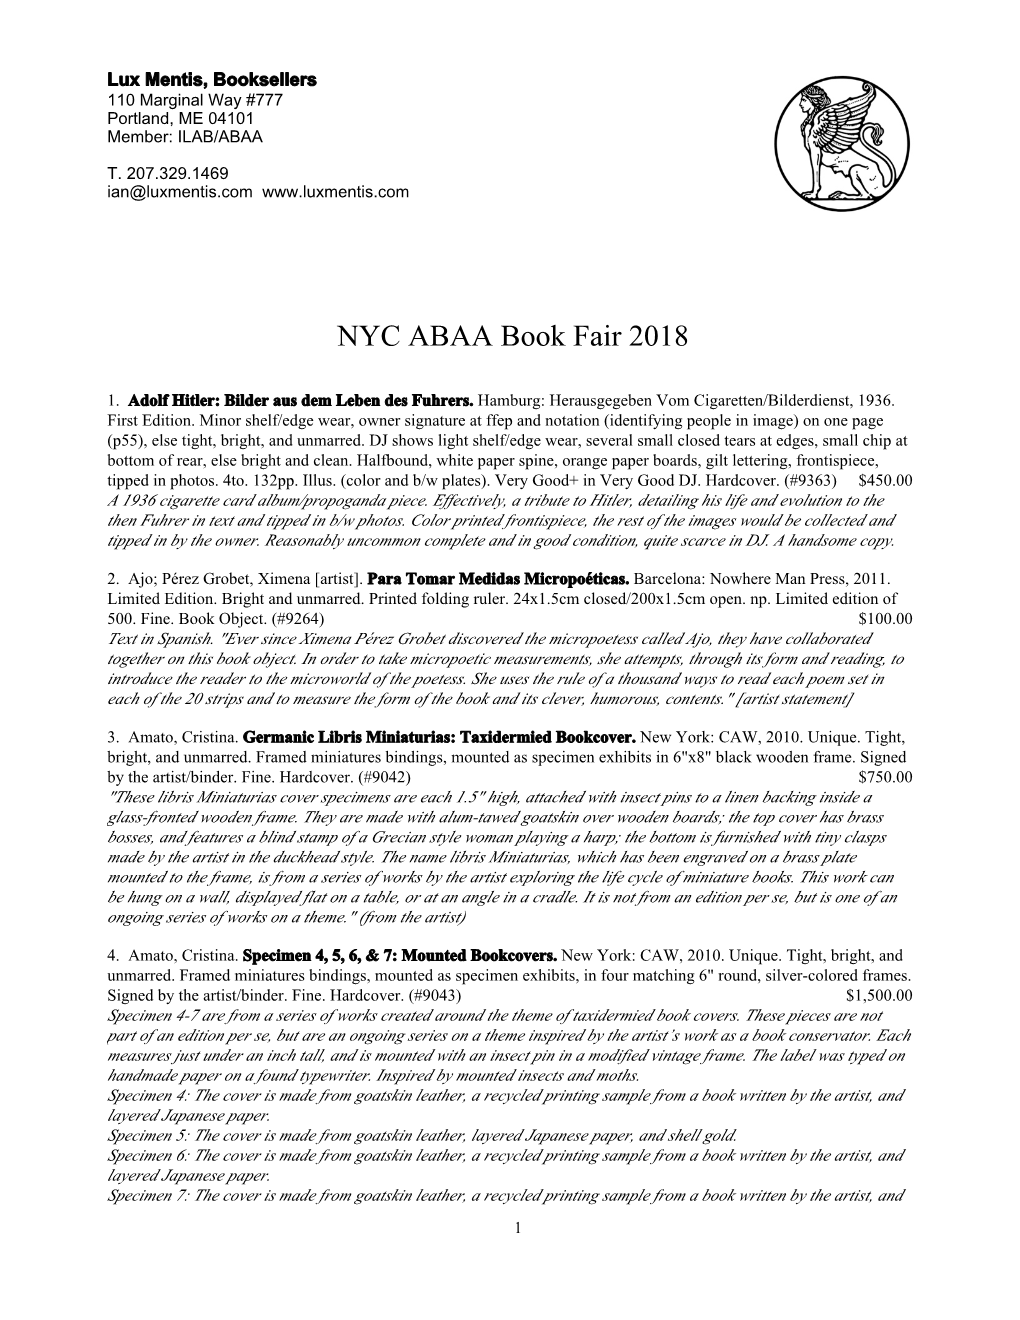 NYC ABAA Book Fair 2018